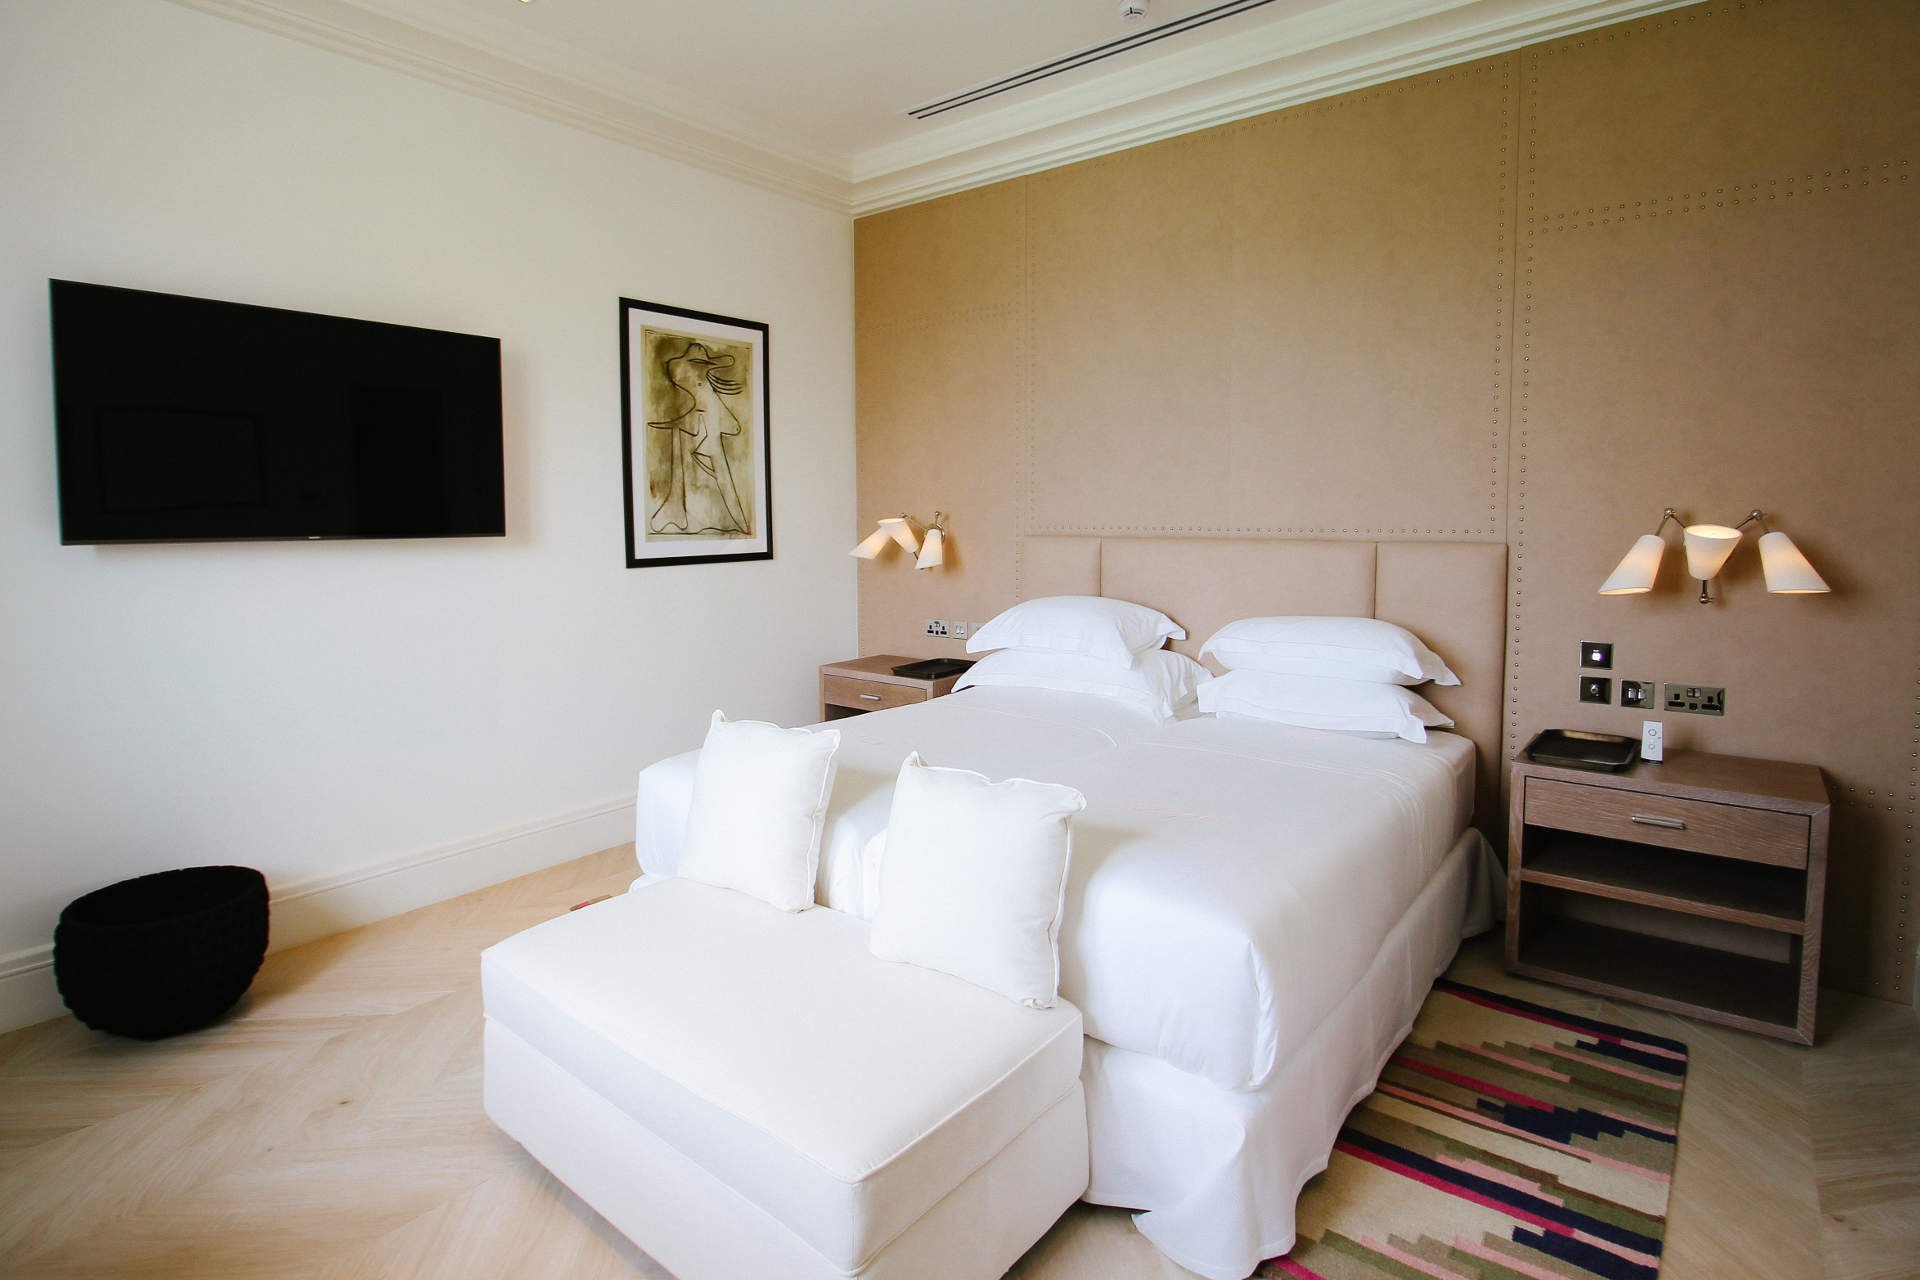 luxury accommodation bedroom